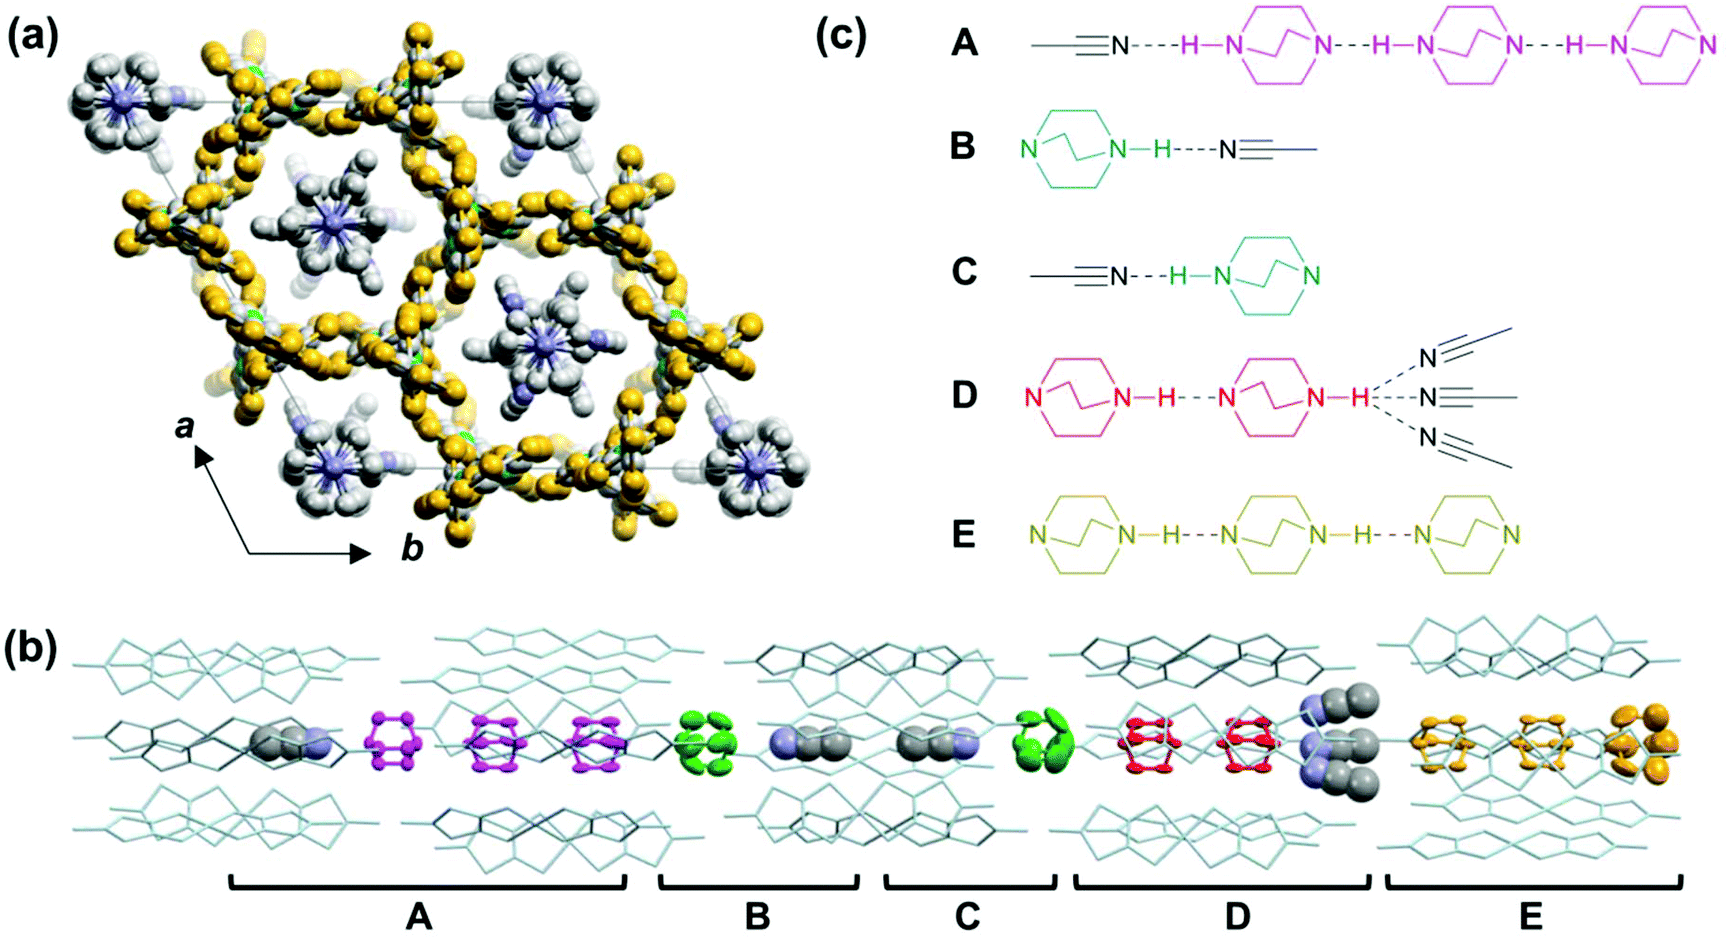 One-dimensional DABCO hydrogen-bonding chain in a hexagonal 